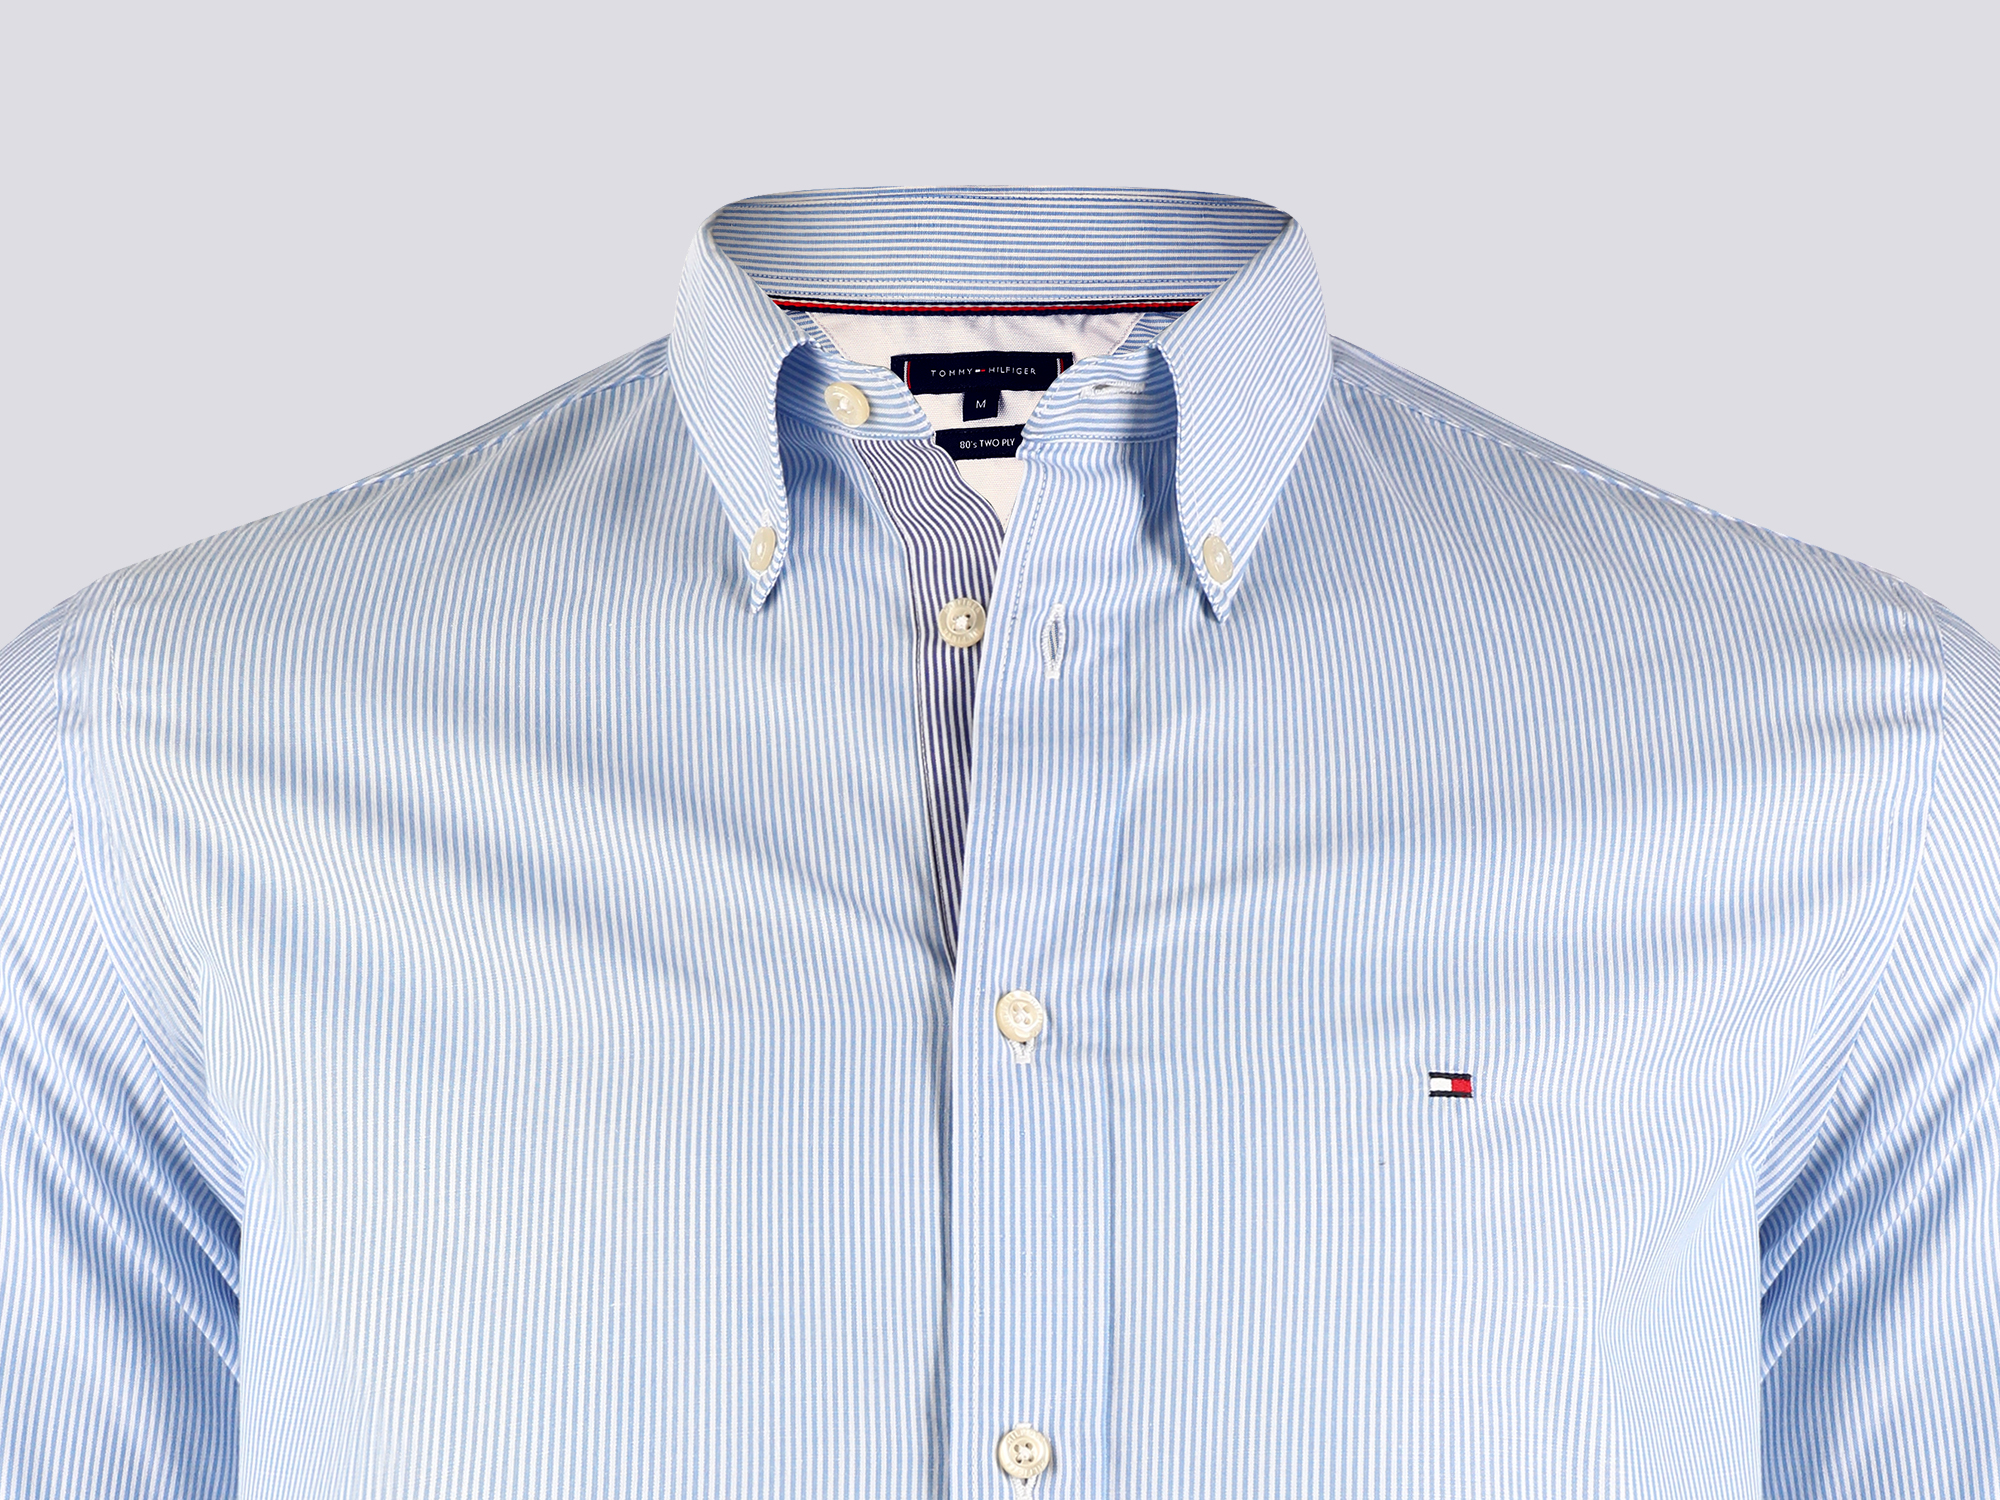 Hilfiger Blue/White Striped - Outlet Fashion